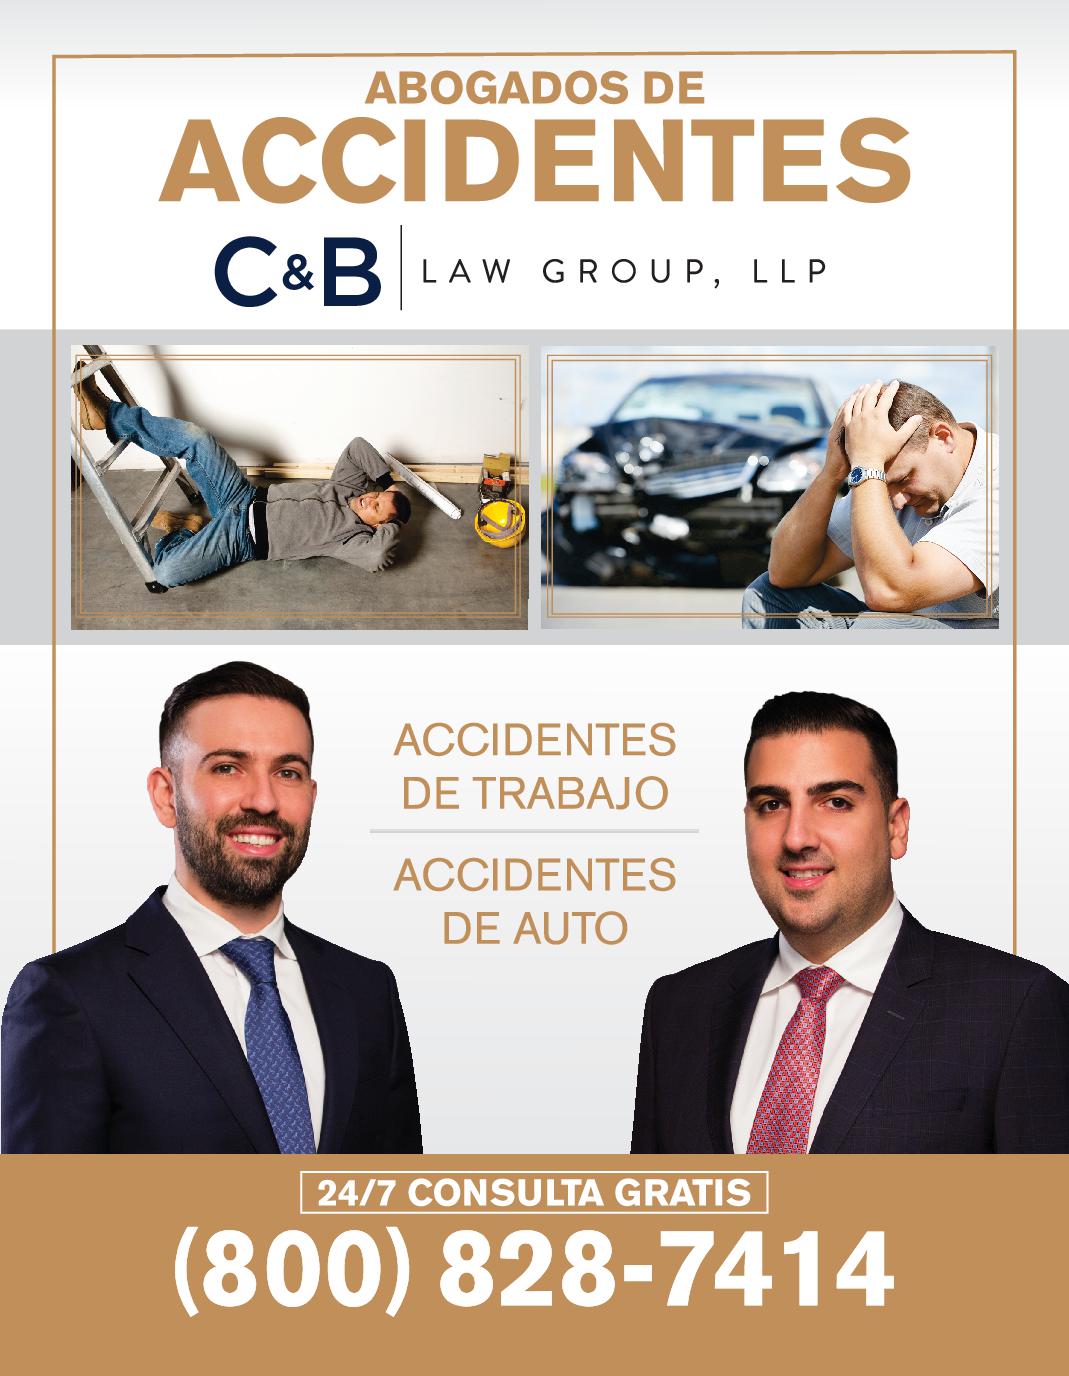 C & B Law Group, LLP